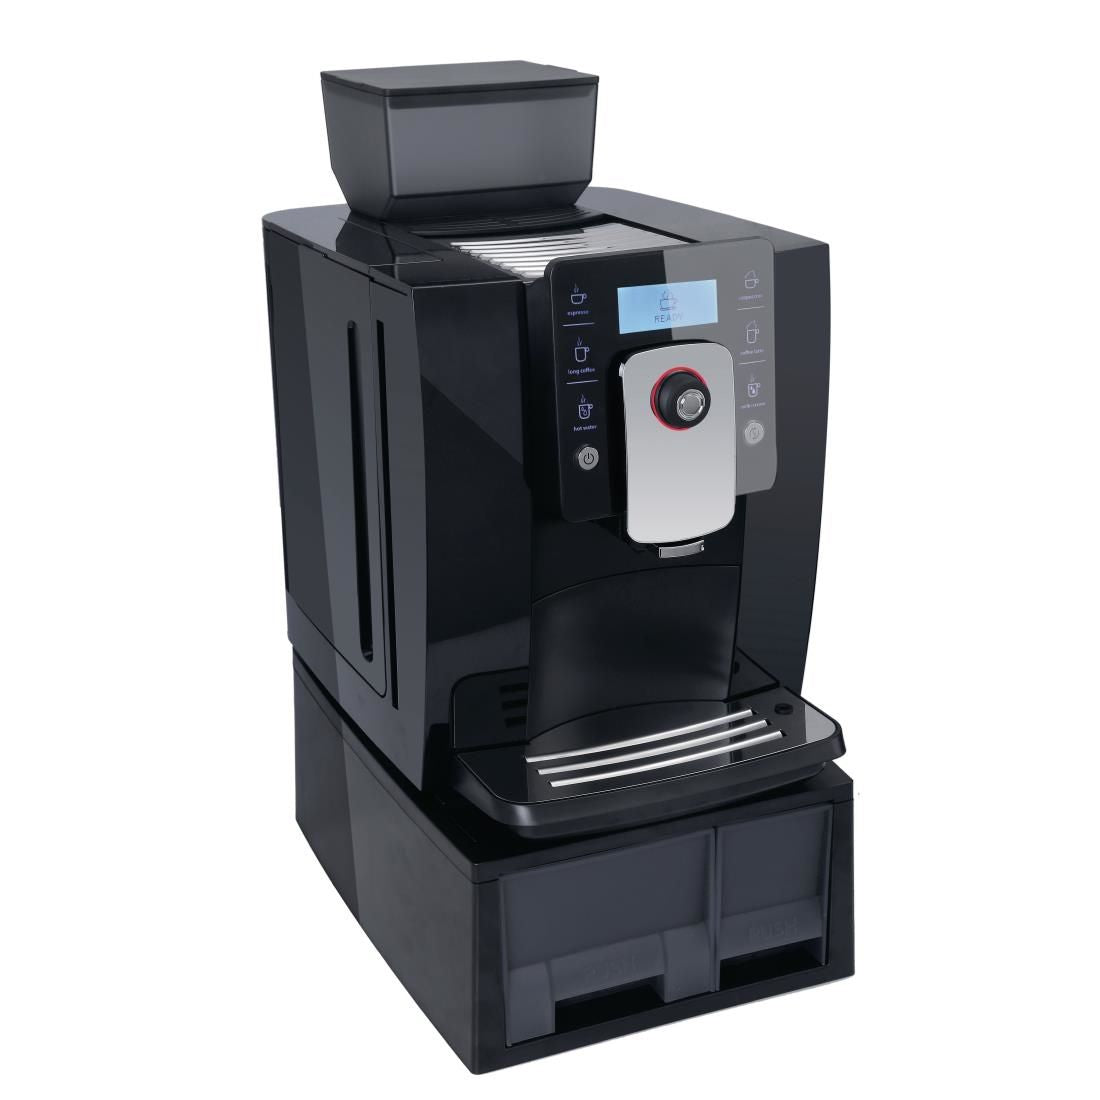 CM631 Blue Ice Azzurri Classico Black Bean to Cup Coffee Machine JD Catering Equipment Solutions Ltd